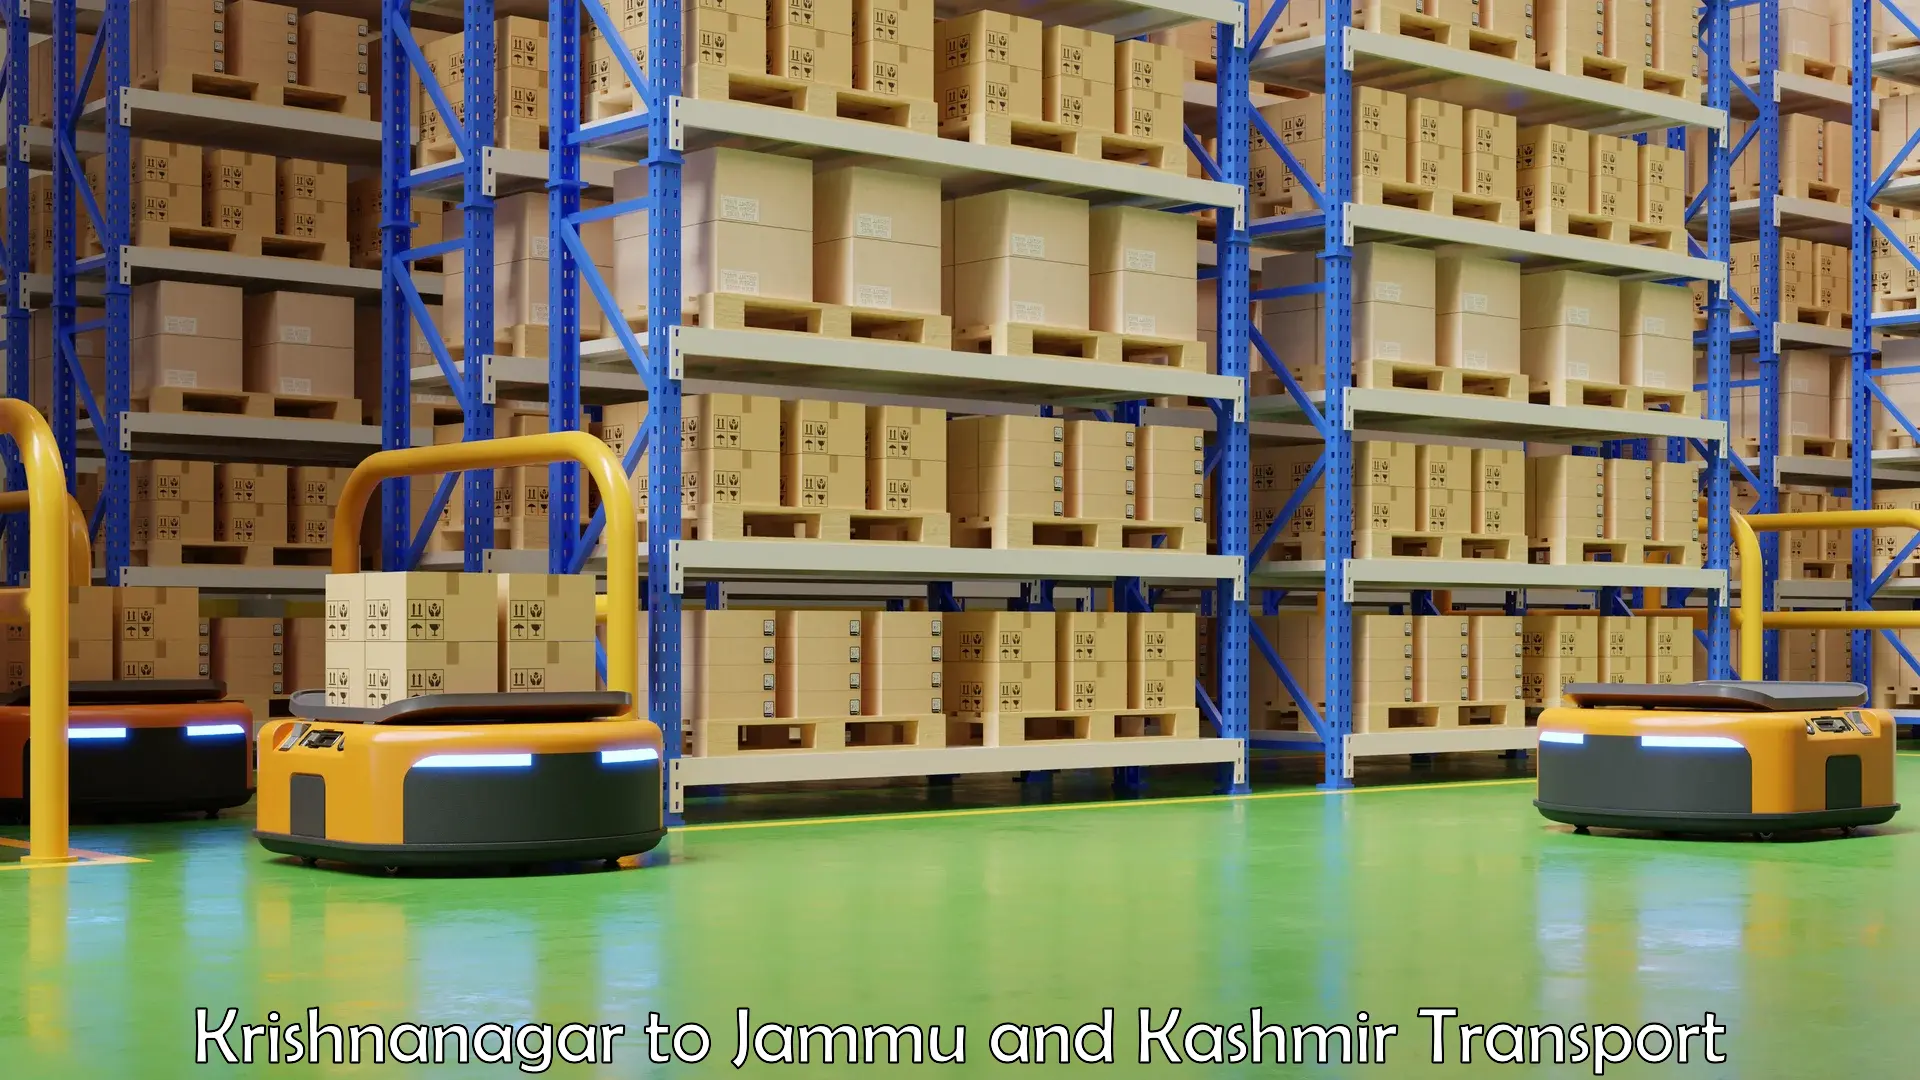 Shipping partner Krishnanagar to Jammu and Kashmir